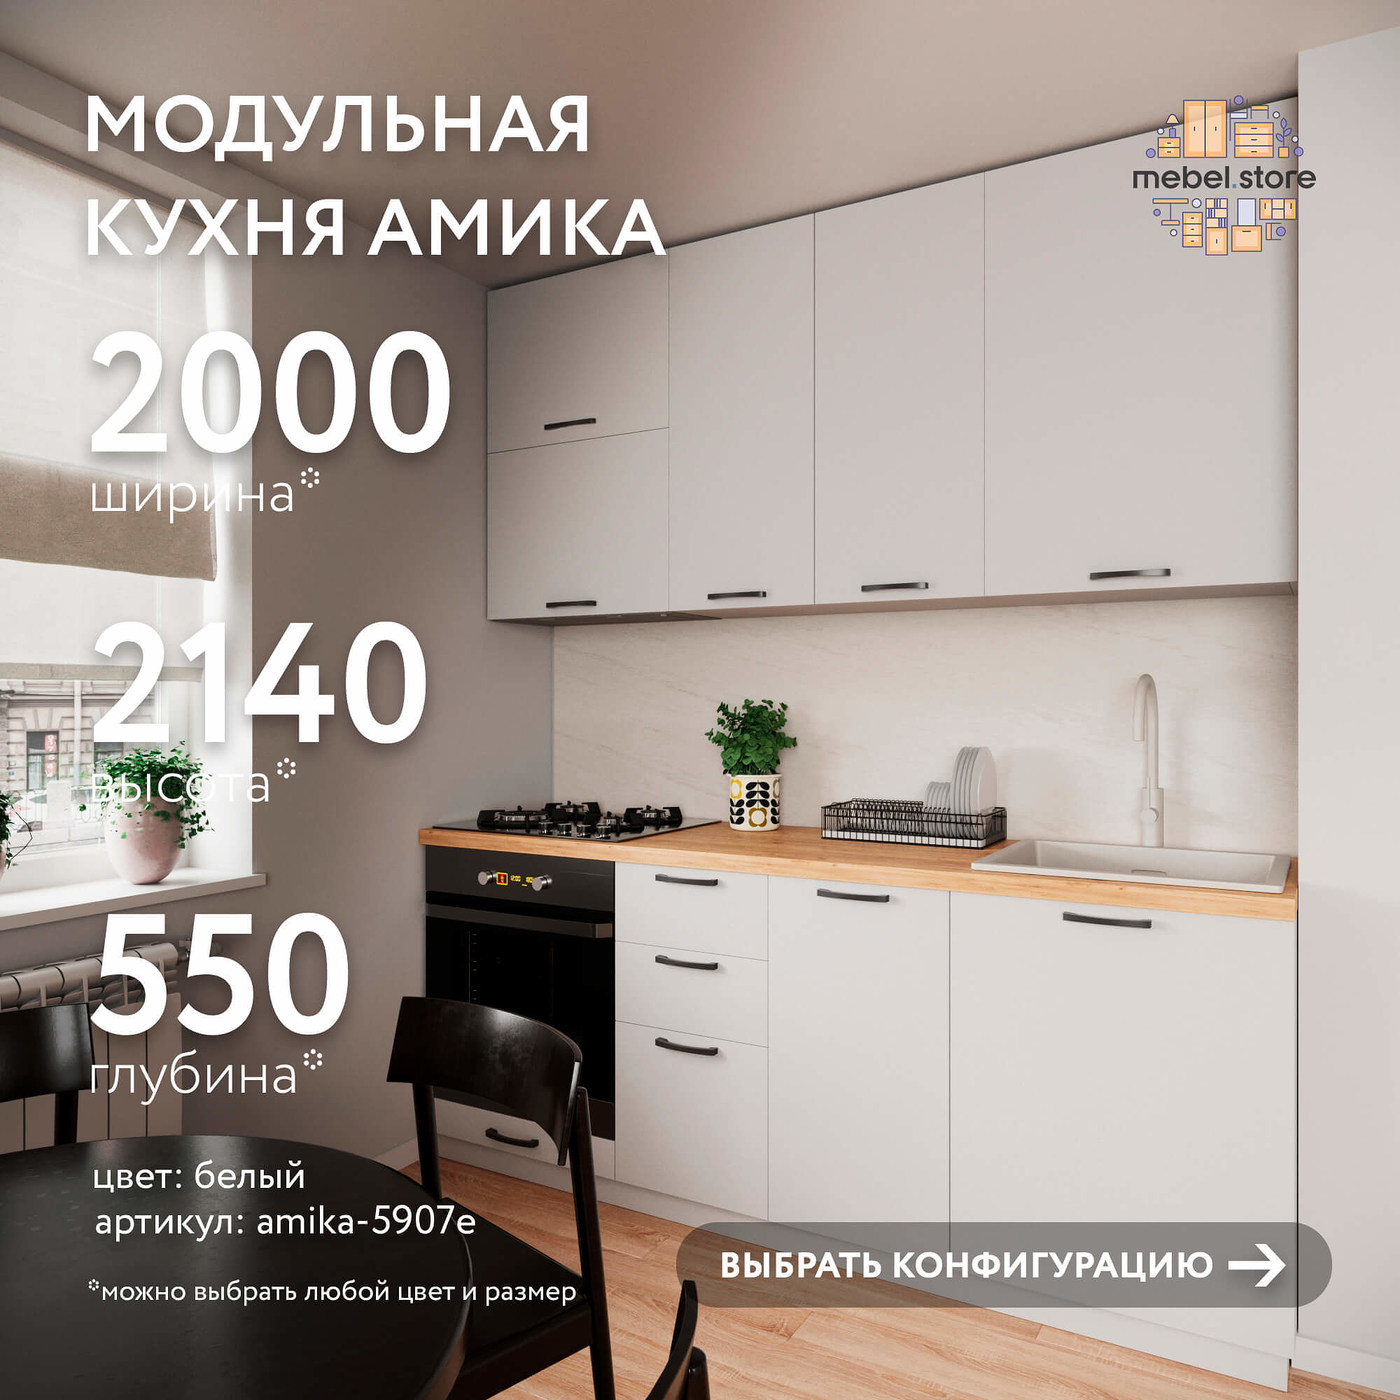 Модульная кухня Амика-5907e минимализм гарнитур - фото 1 large